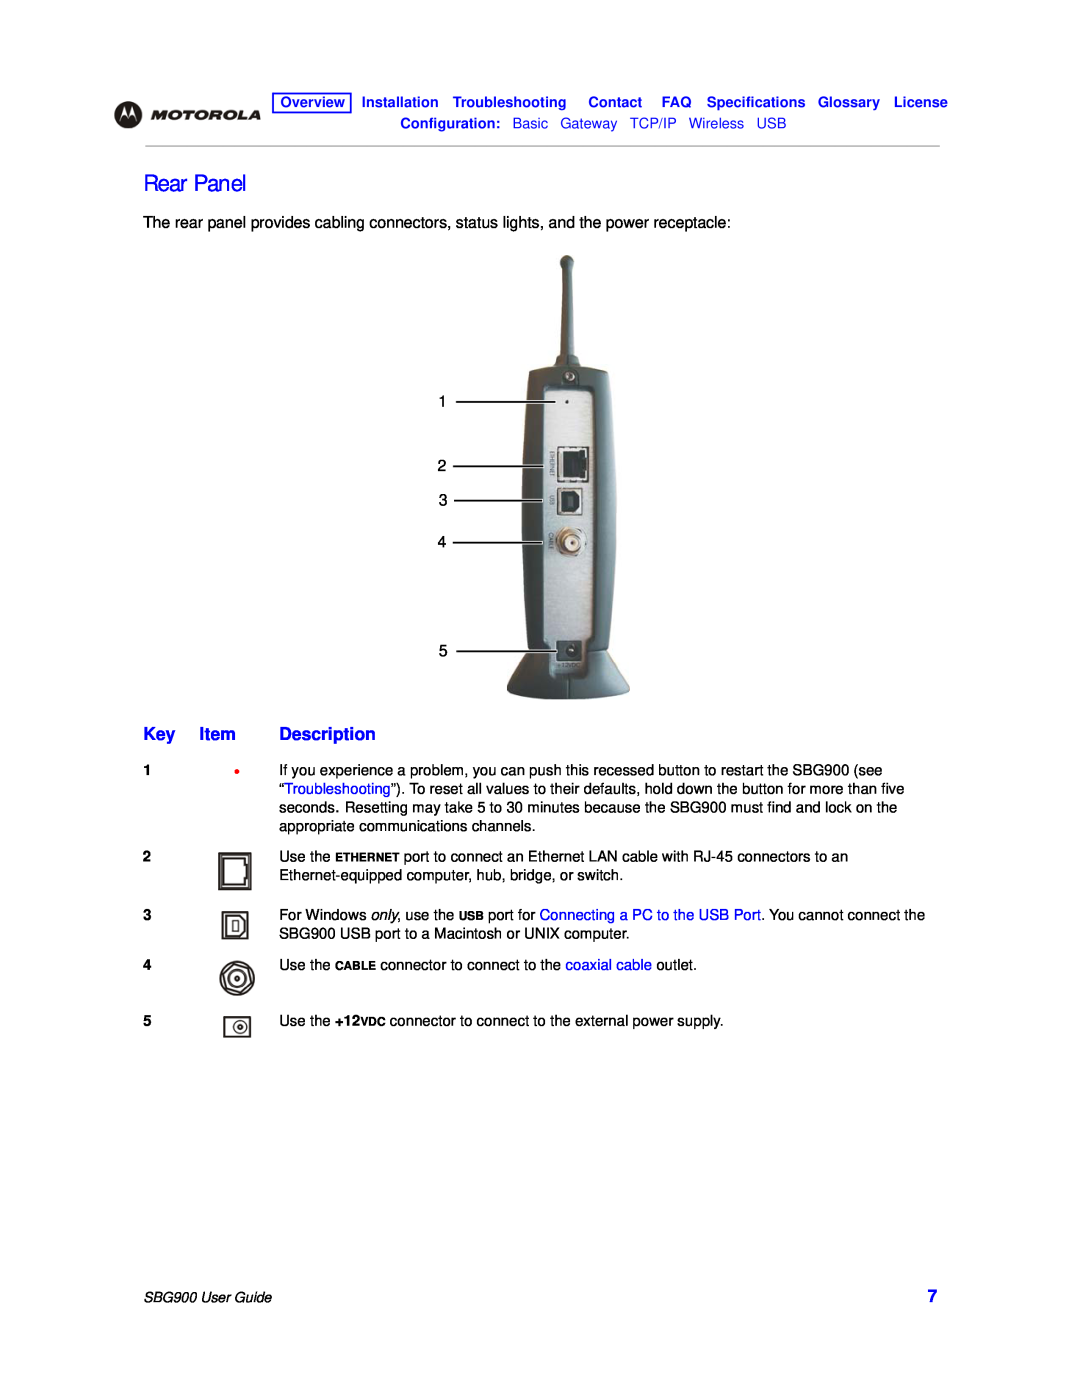 Motorola manual Rear Panel, Key Item Description, Configuration Basic Gateway TCP/IP Wireless USB, SBG900 User Guide 